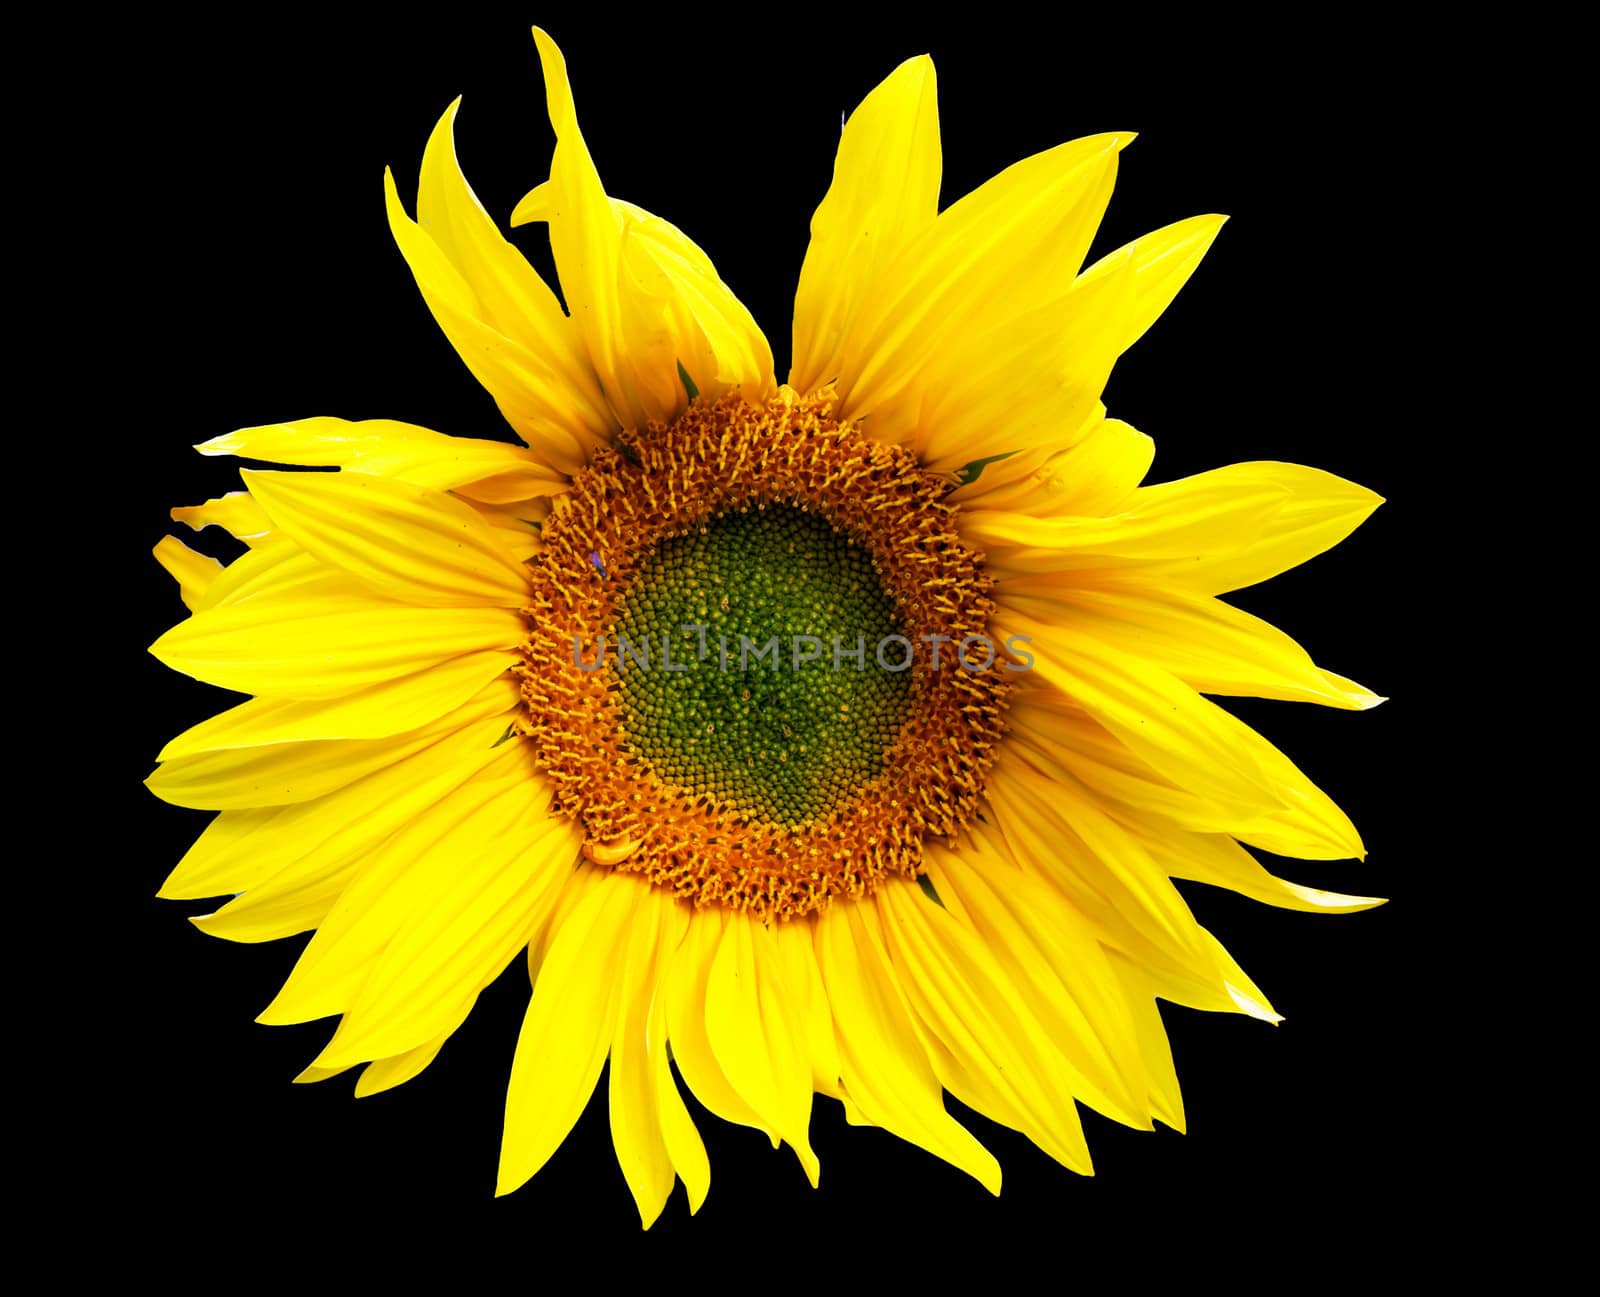 Sunflower on black background by cobol1964